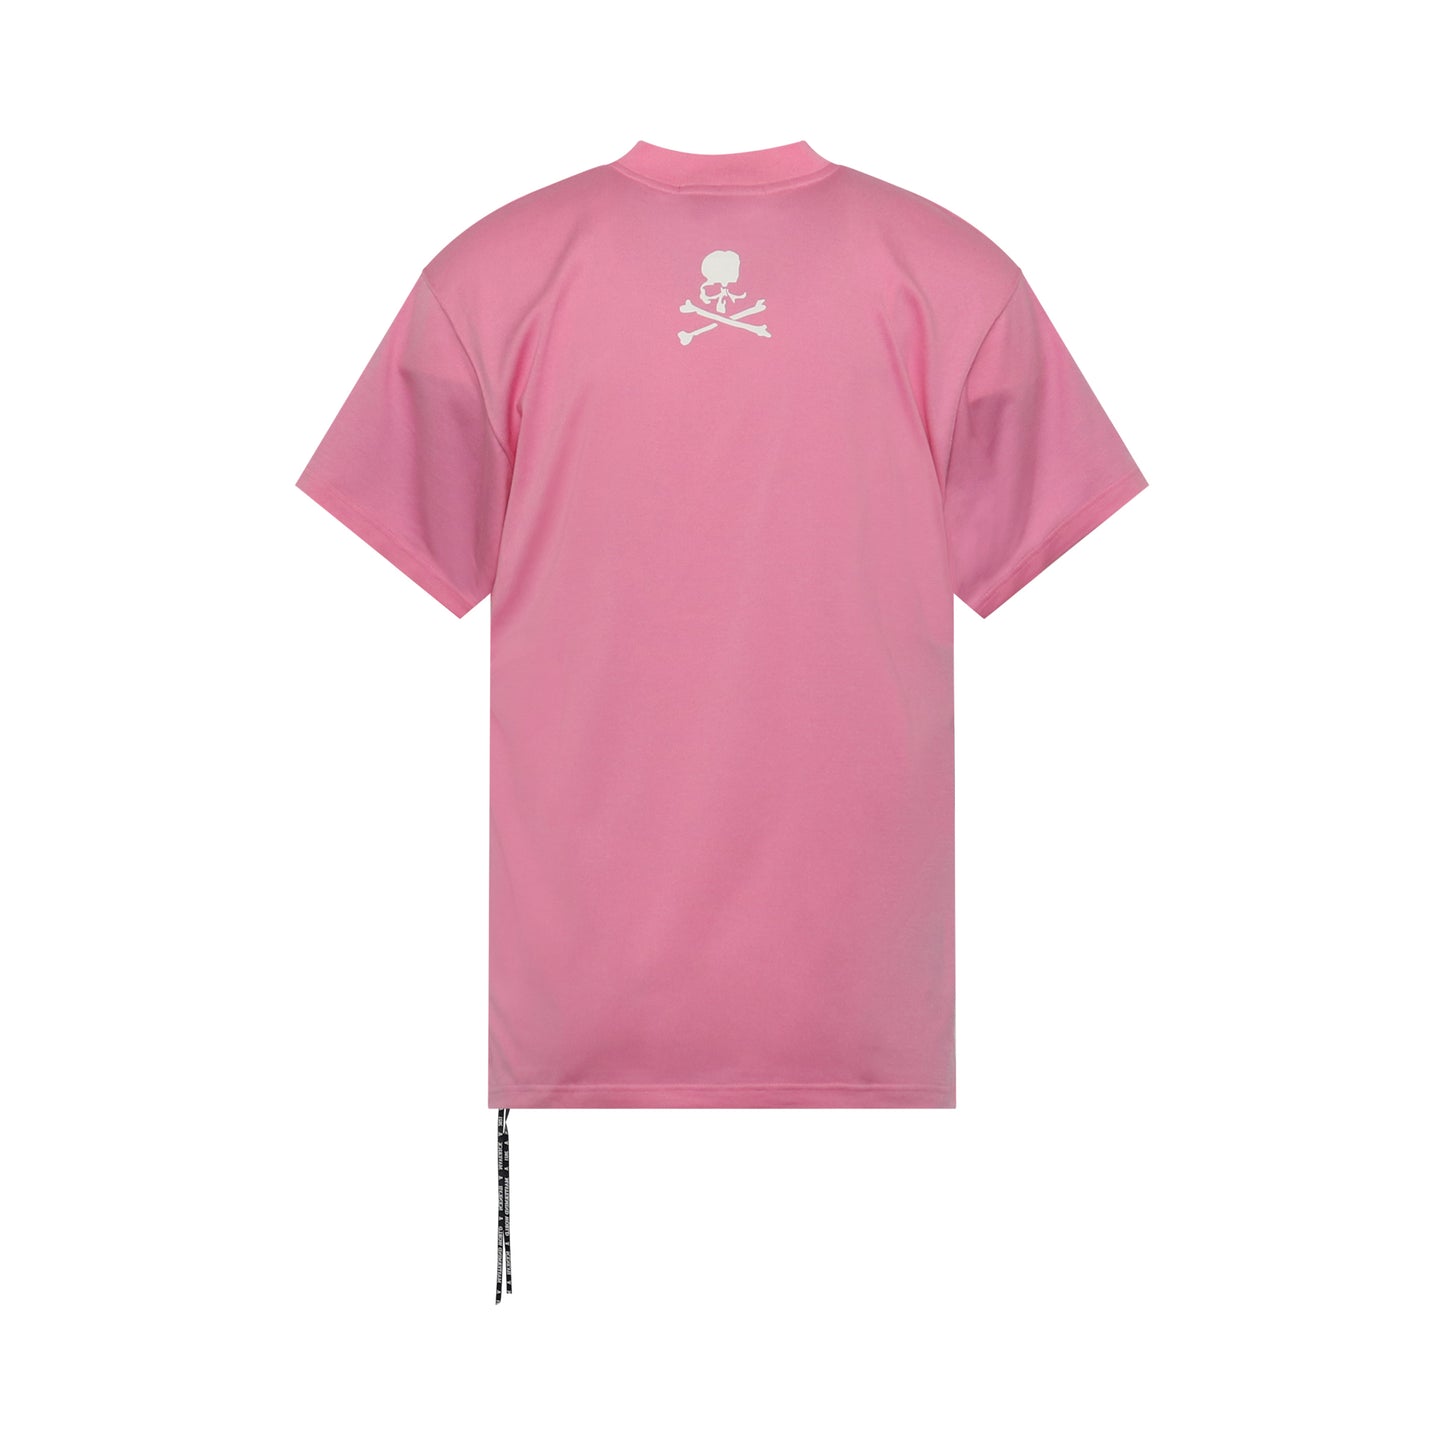 2 Colors Logo T-Shirt in Black/Pink